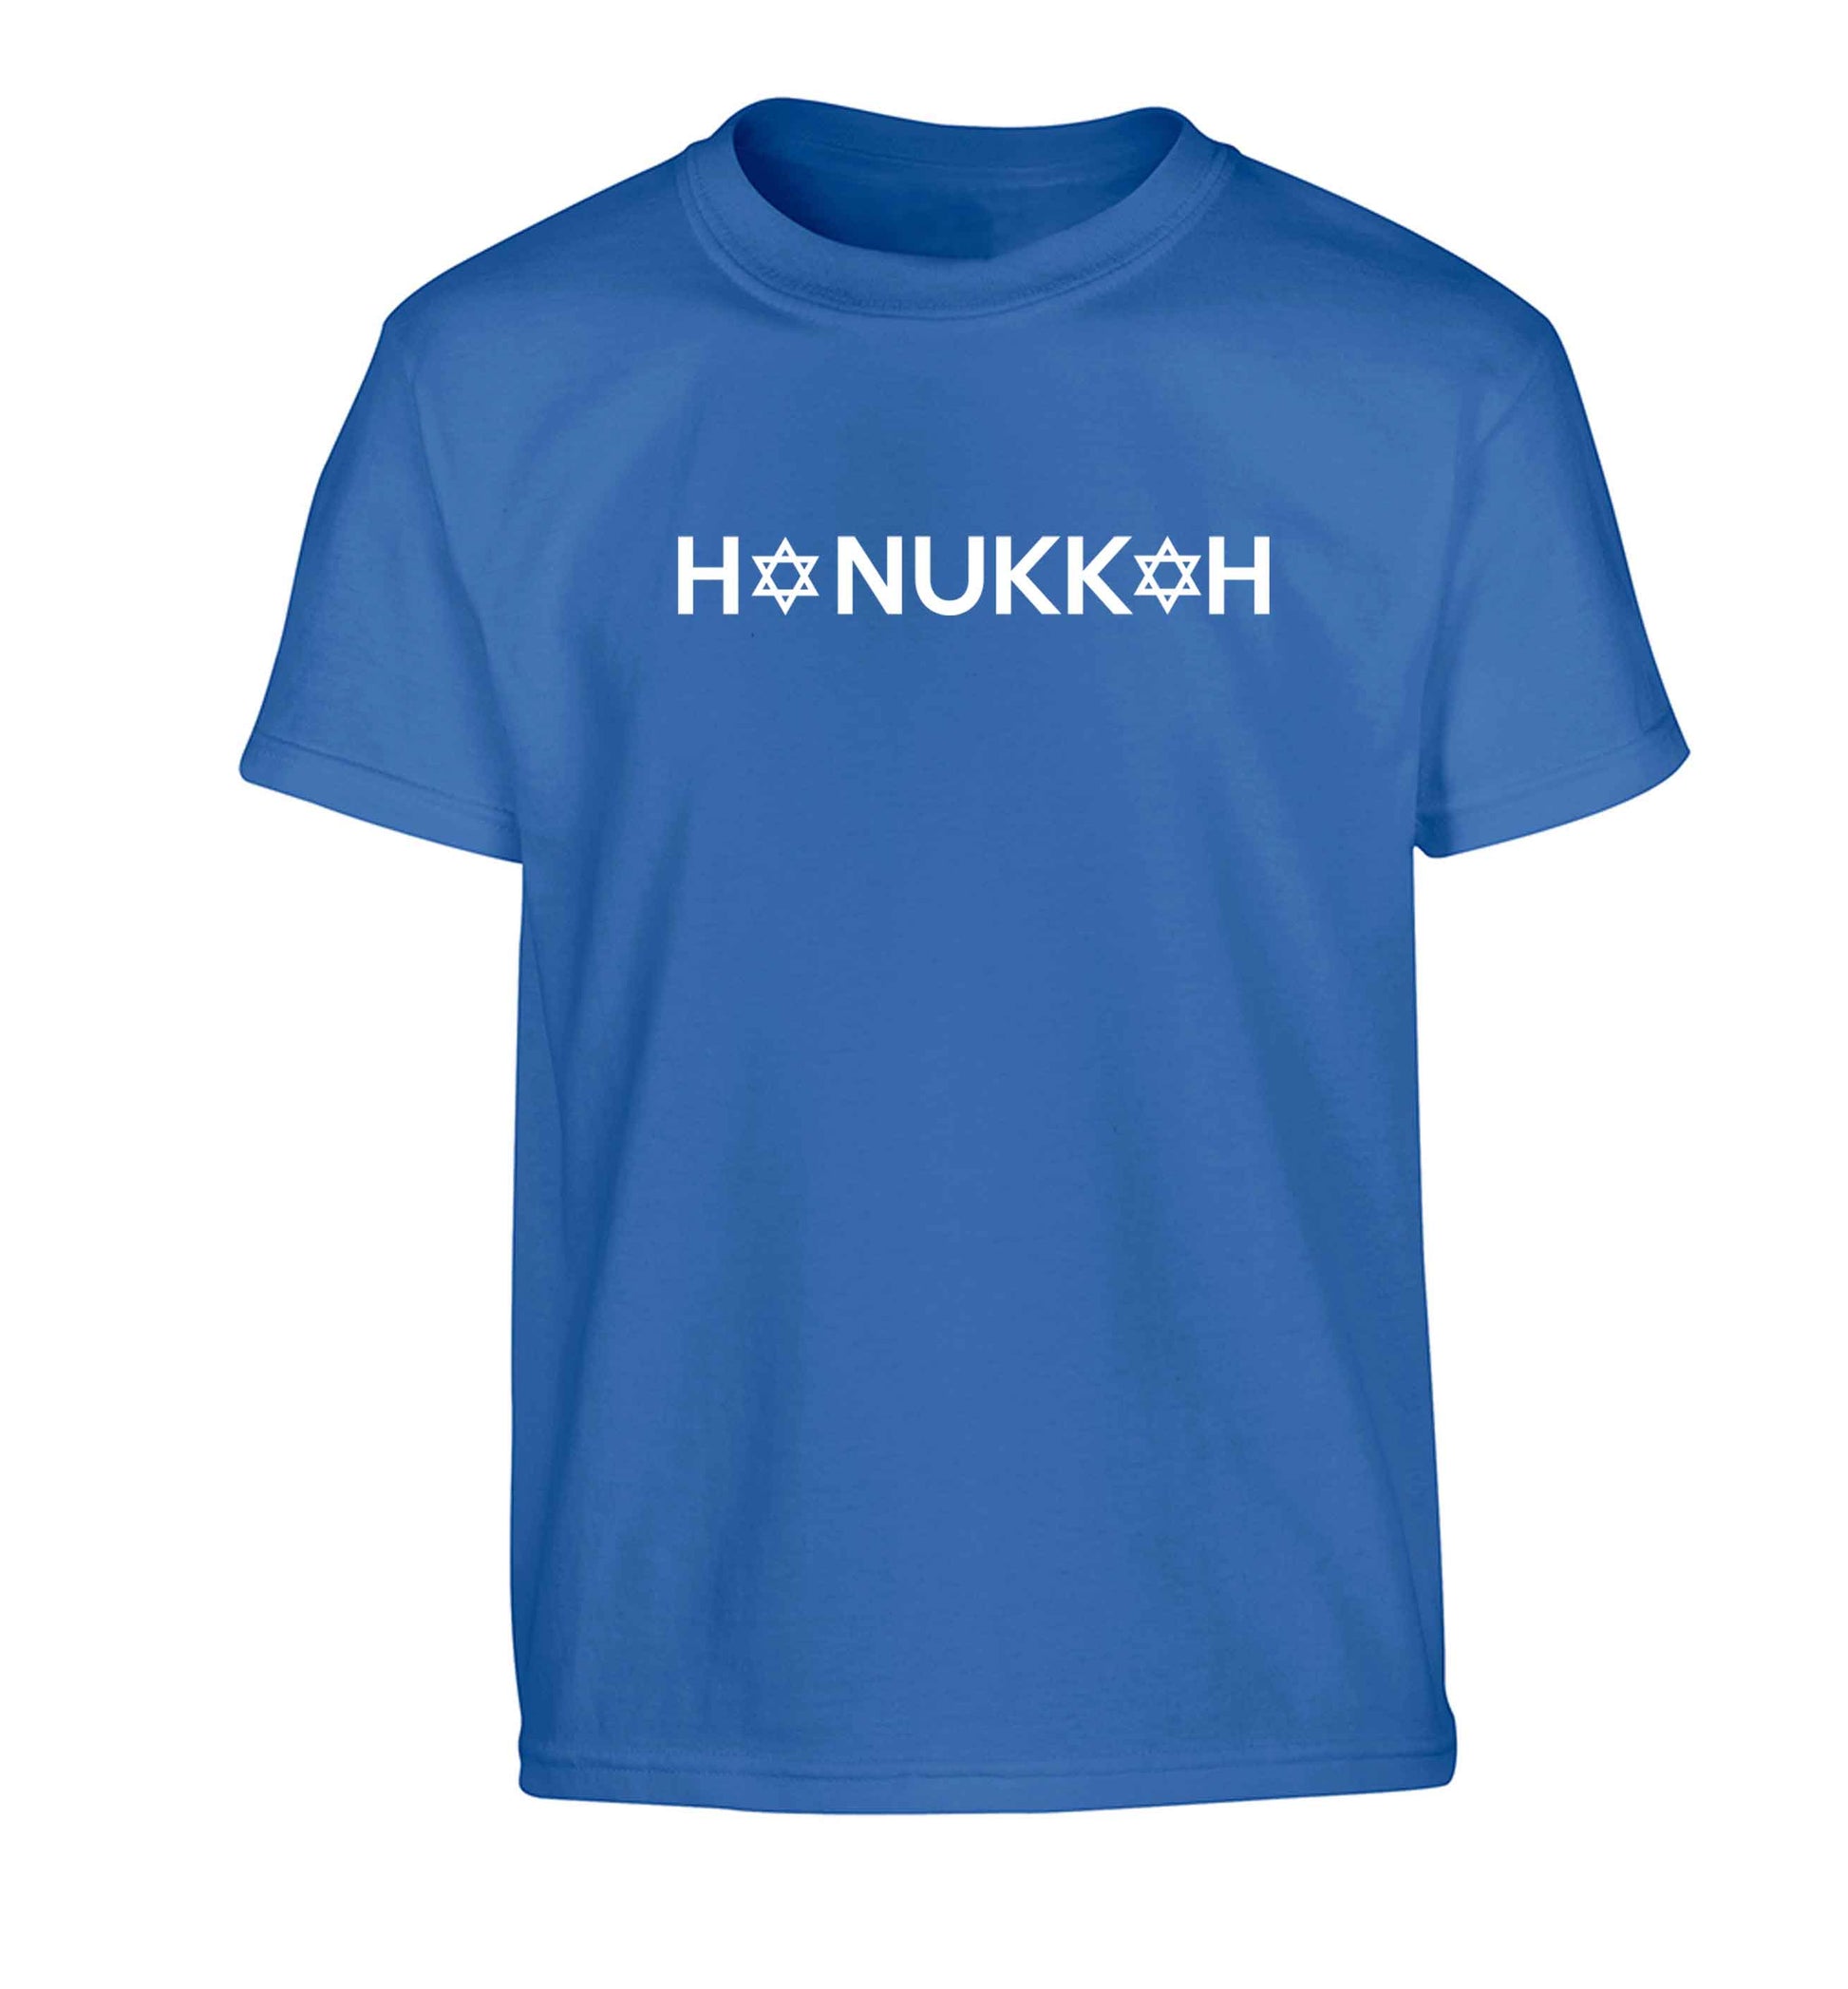 Hanukkah star of david Children's blue Tshirt 12-13 Years